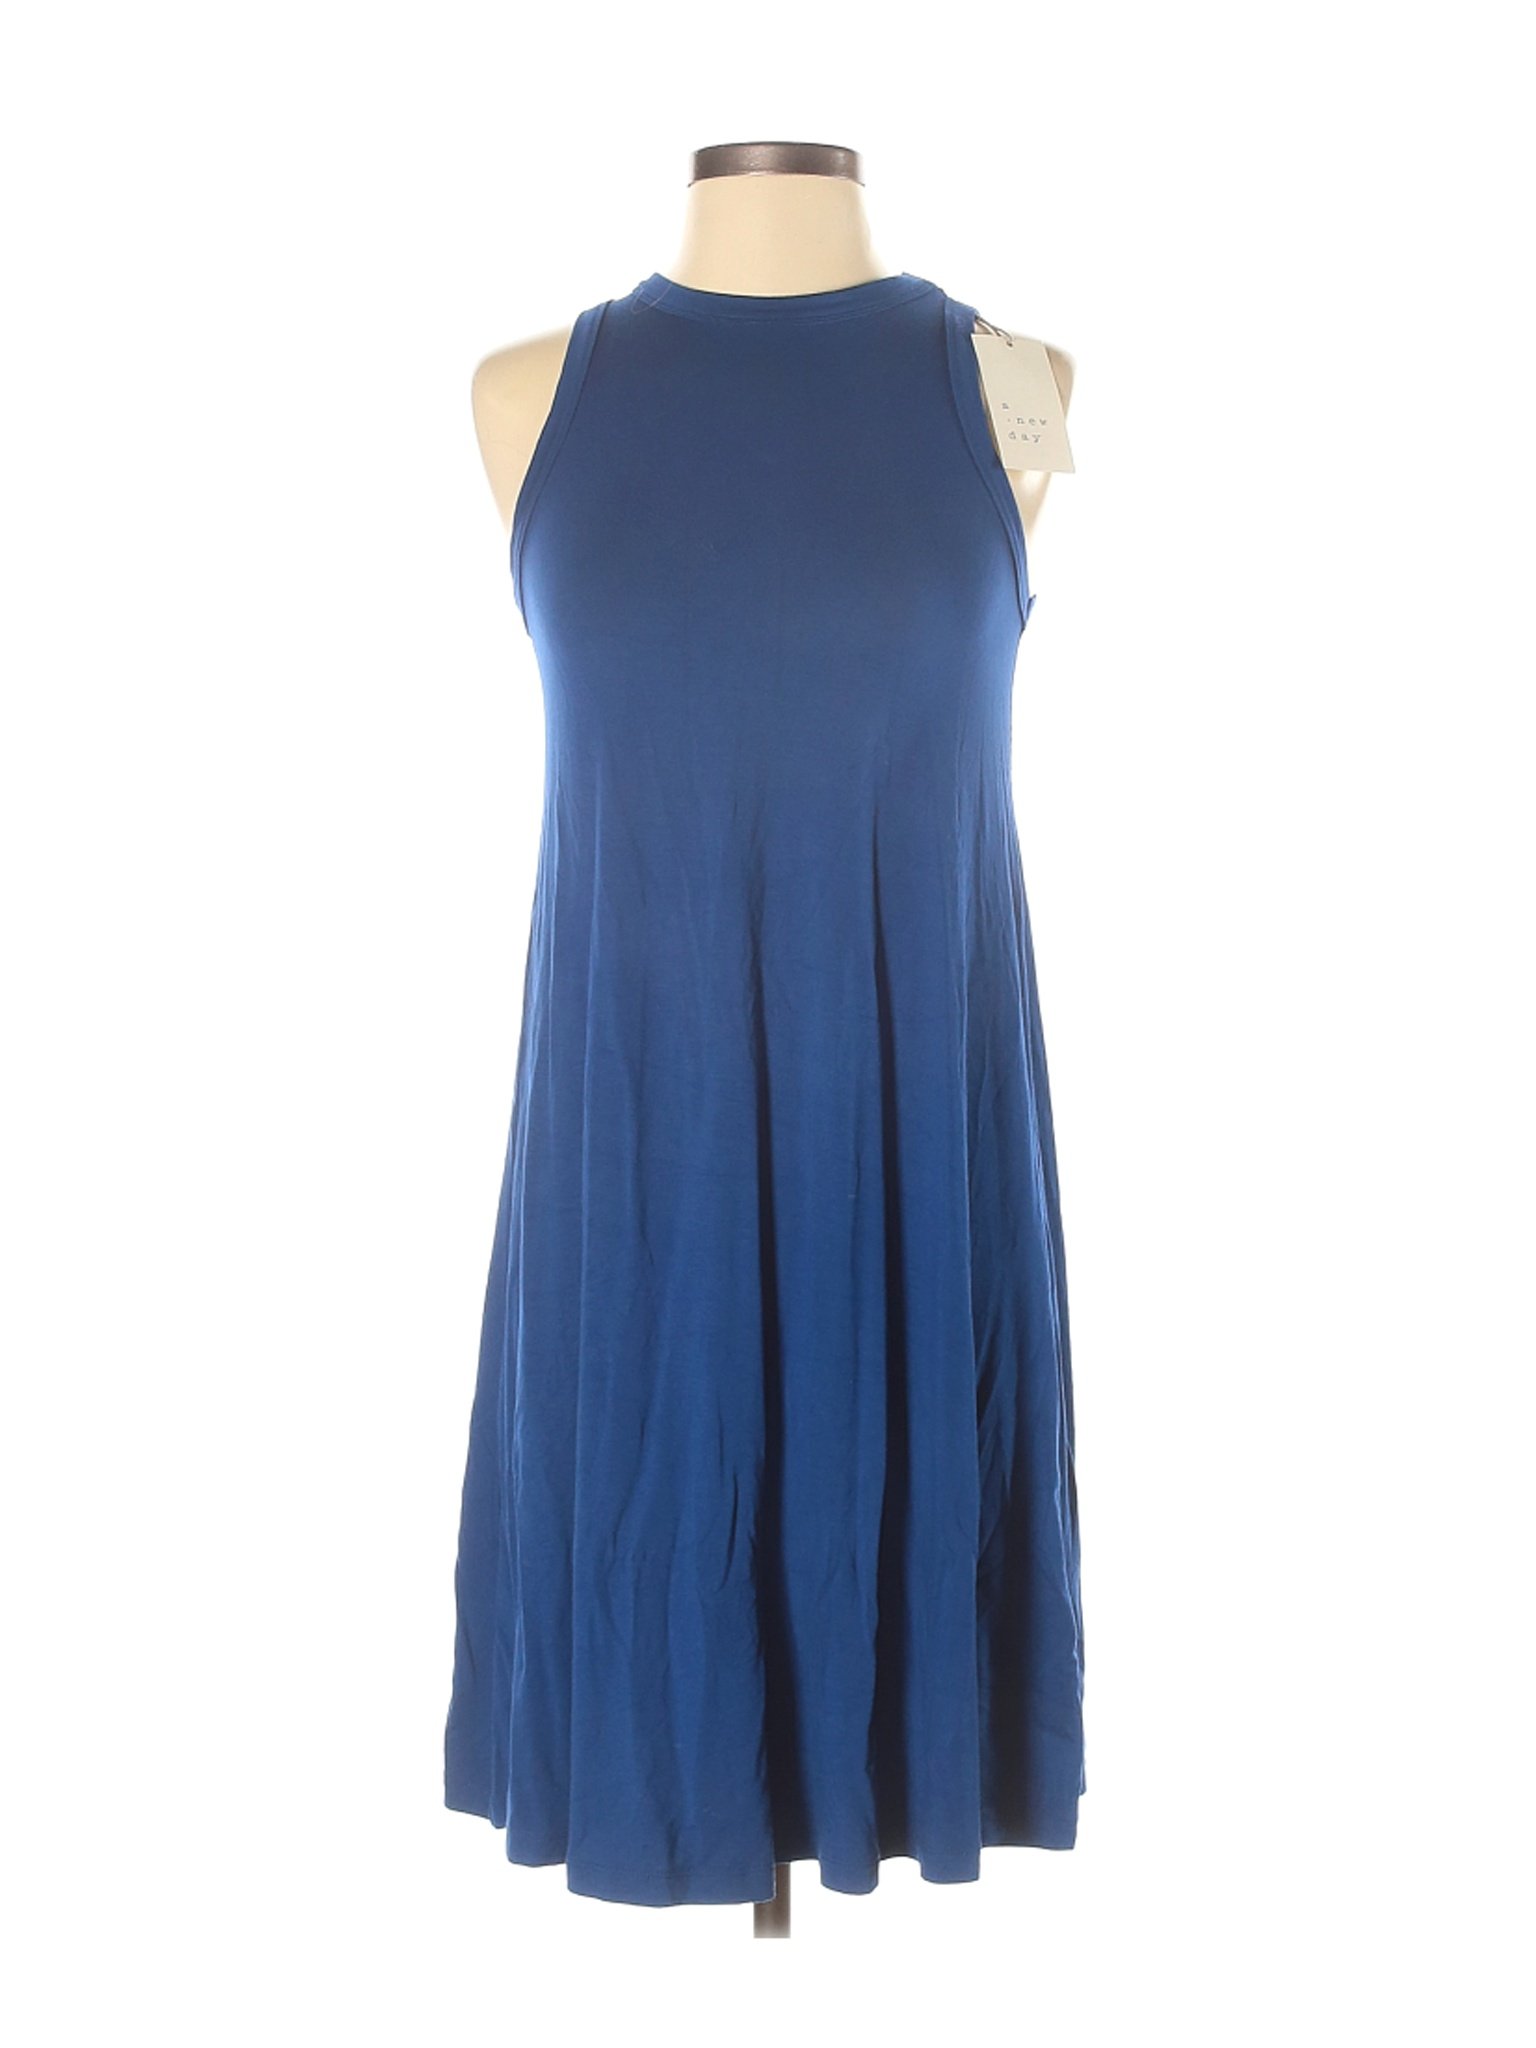 NWT A New Day Women Blue Casual Dress XS | eBay